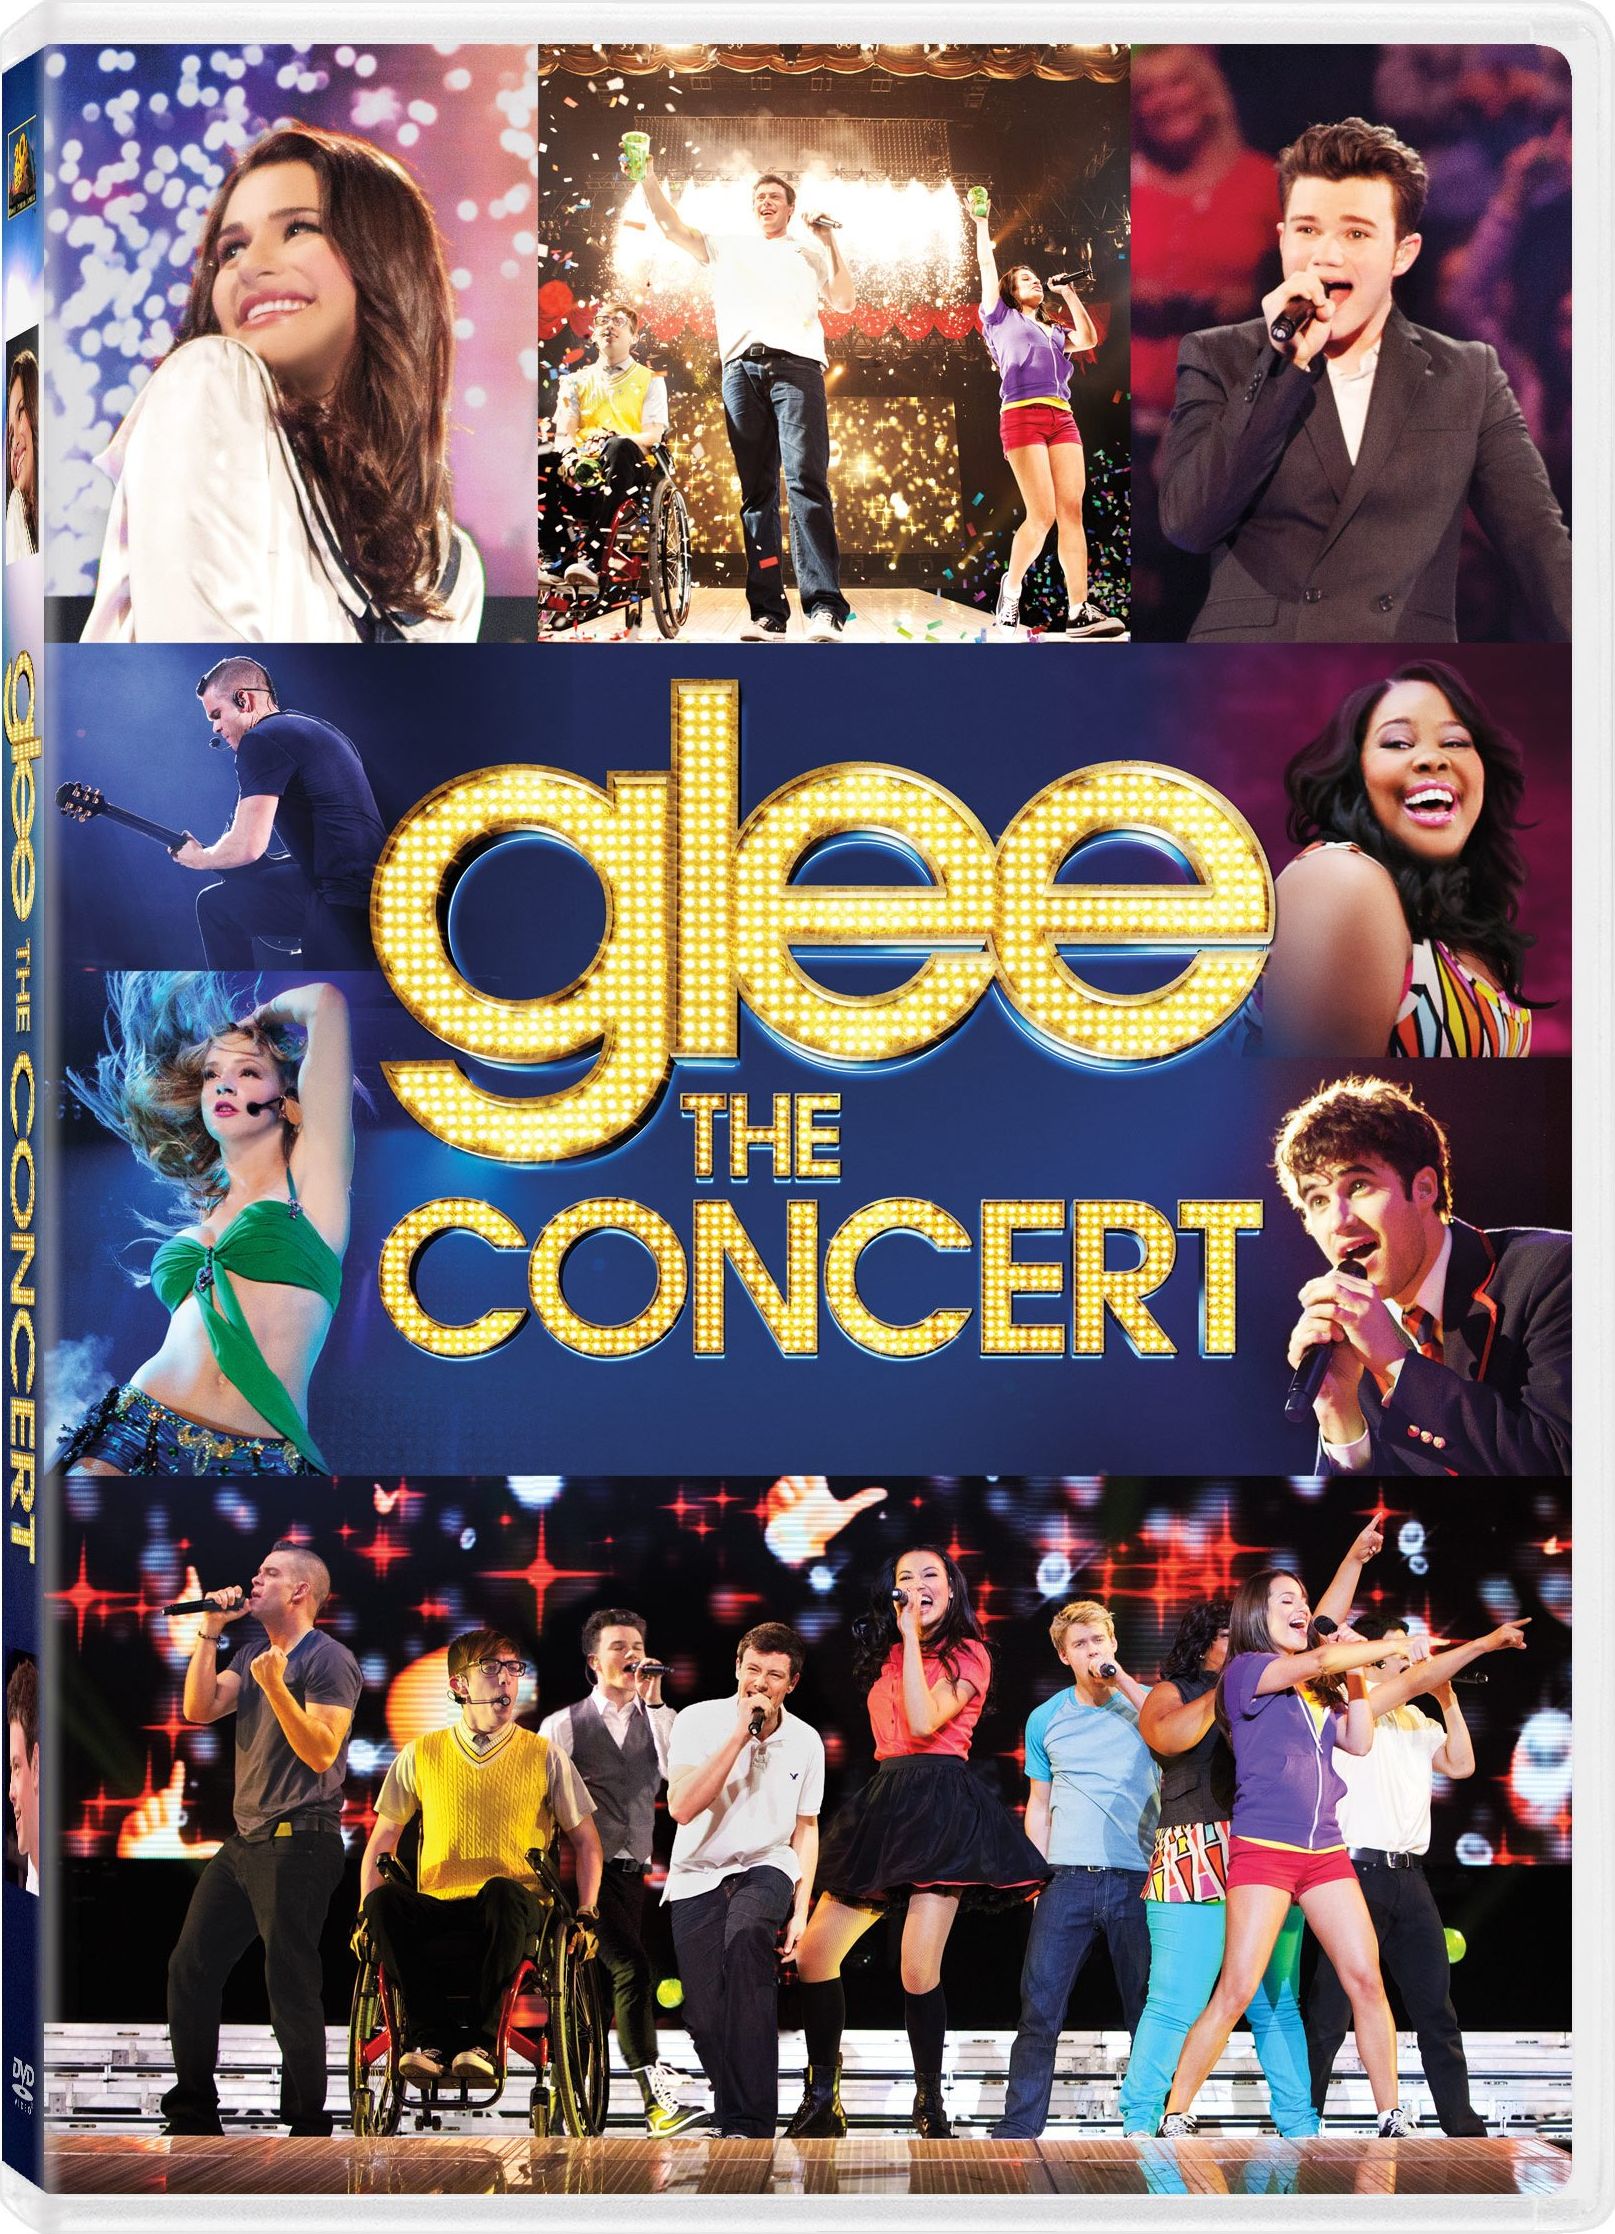 Glee The 3d Concert Movie Dvd Release Date December 20 2011